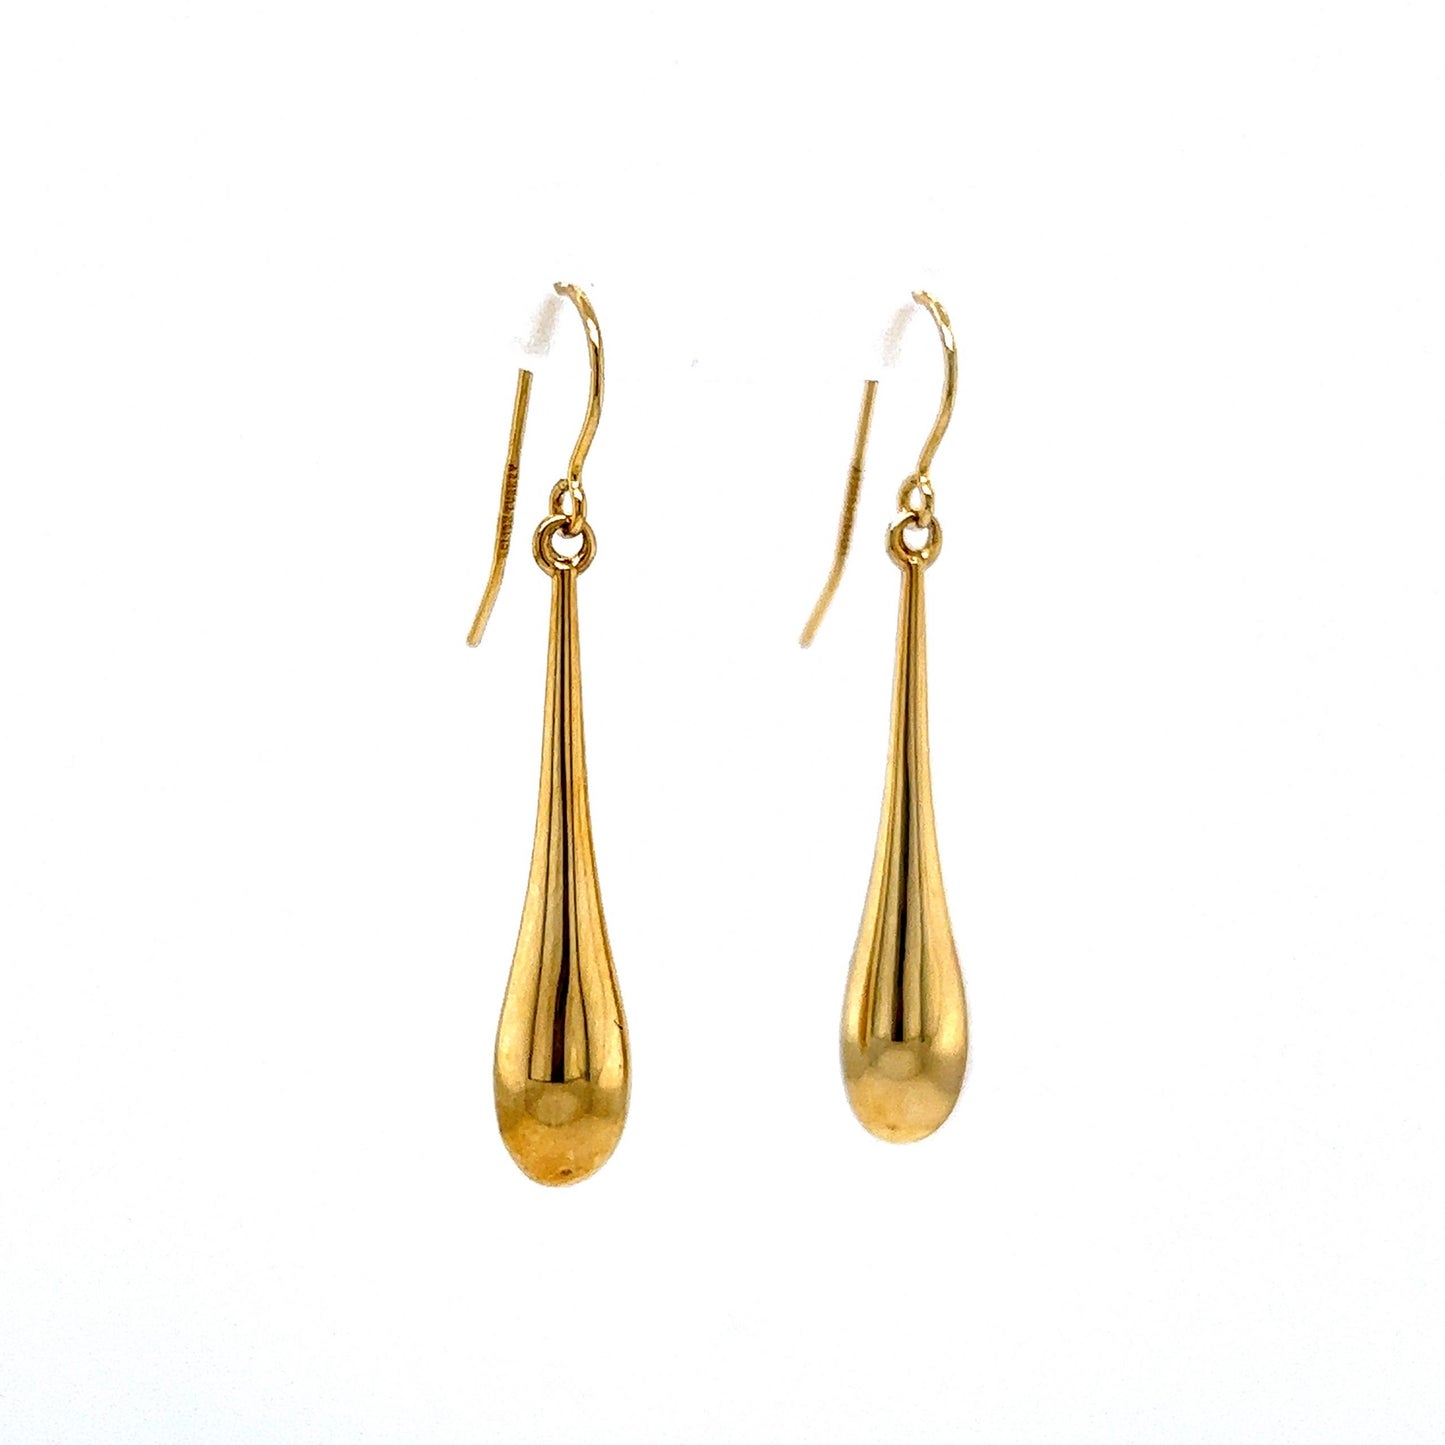 Elongated Raindrop Earrings in 10k Yellow Gold